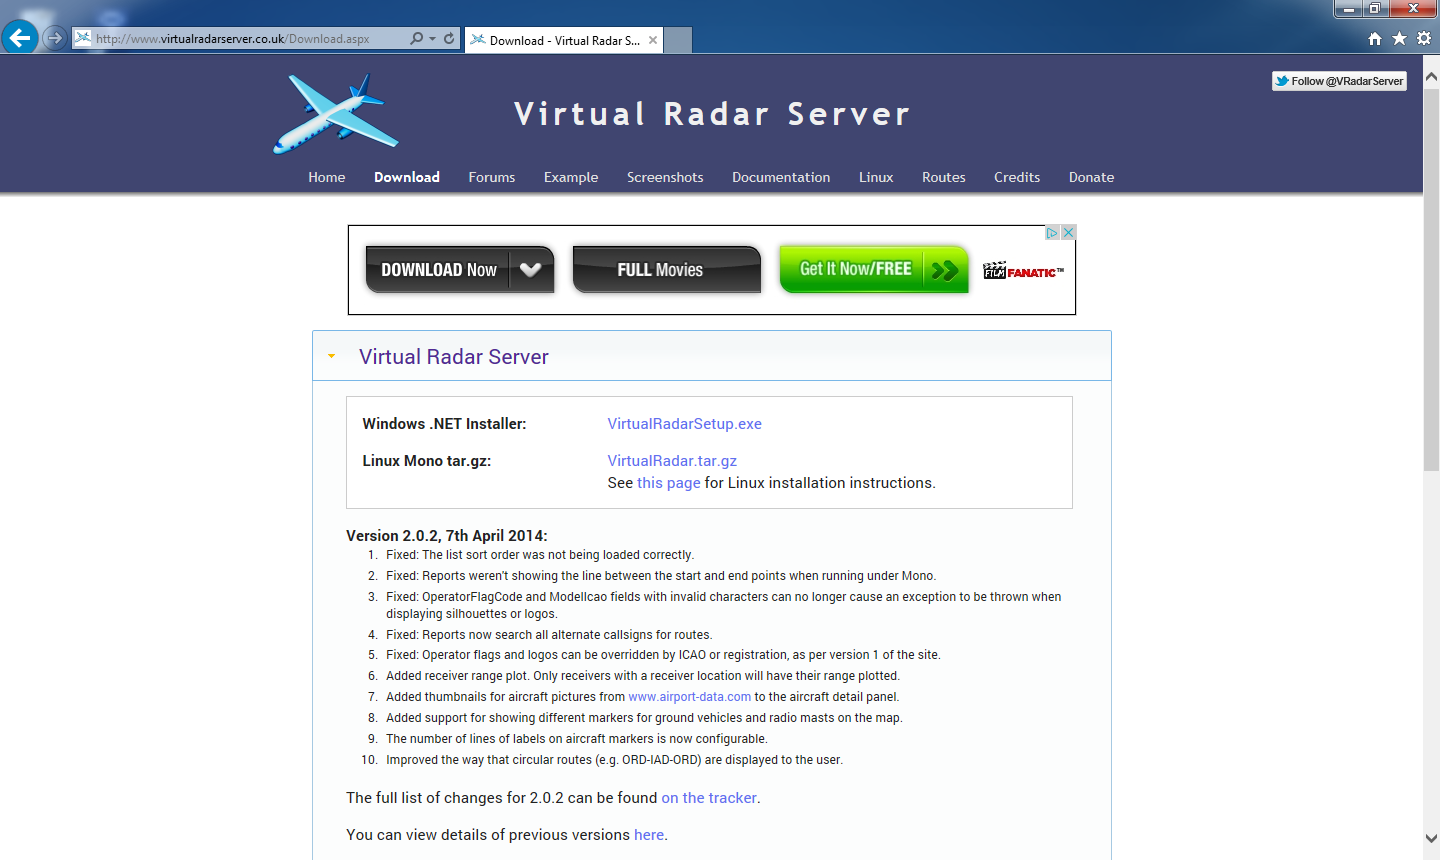 adsb-03_virtual_radar_server-01_virtual_radar_server_website_download